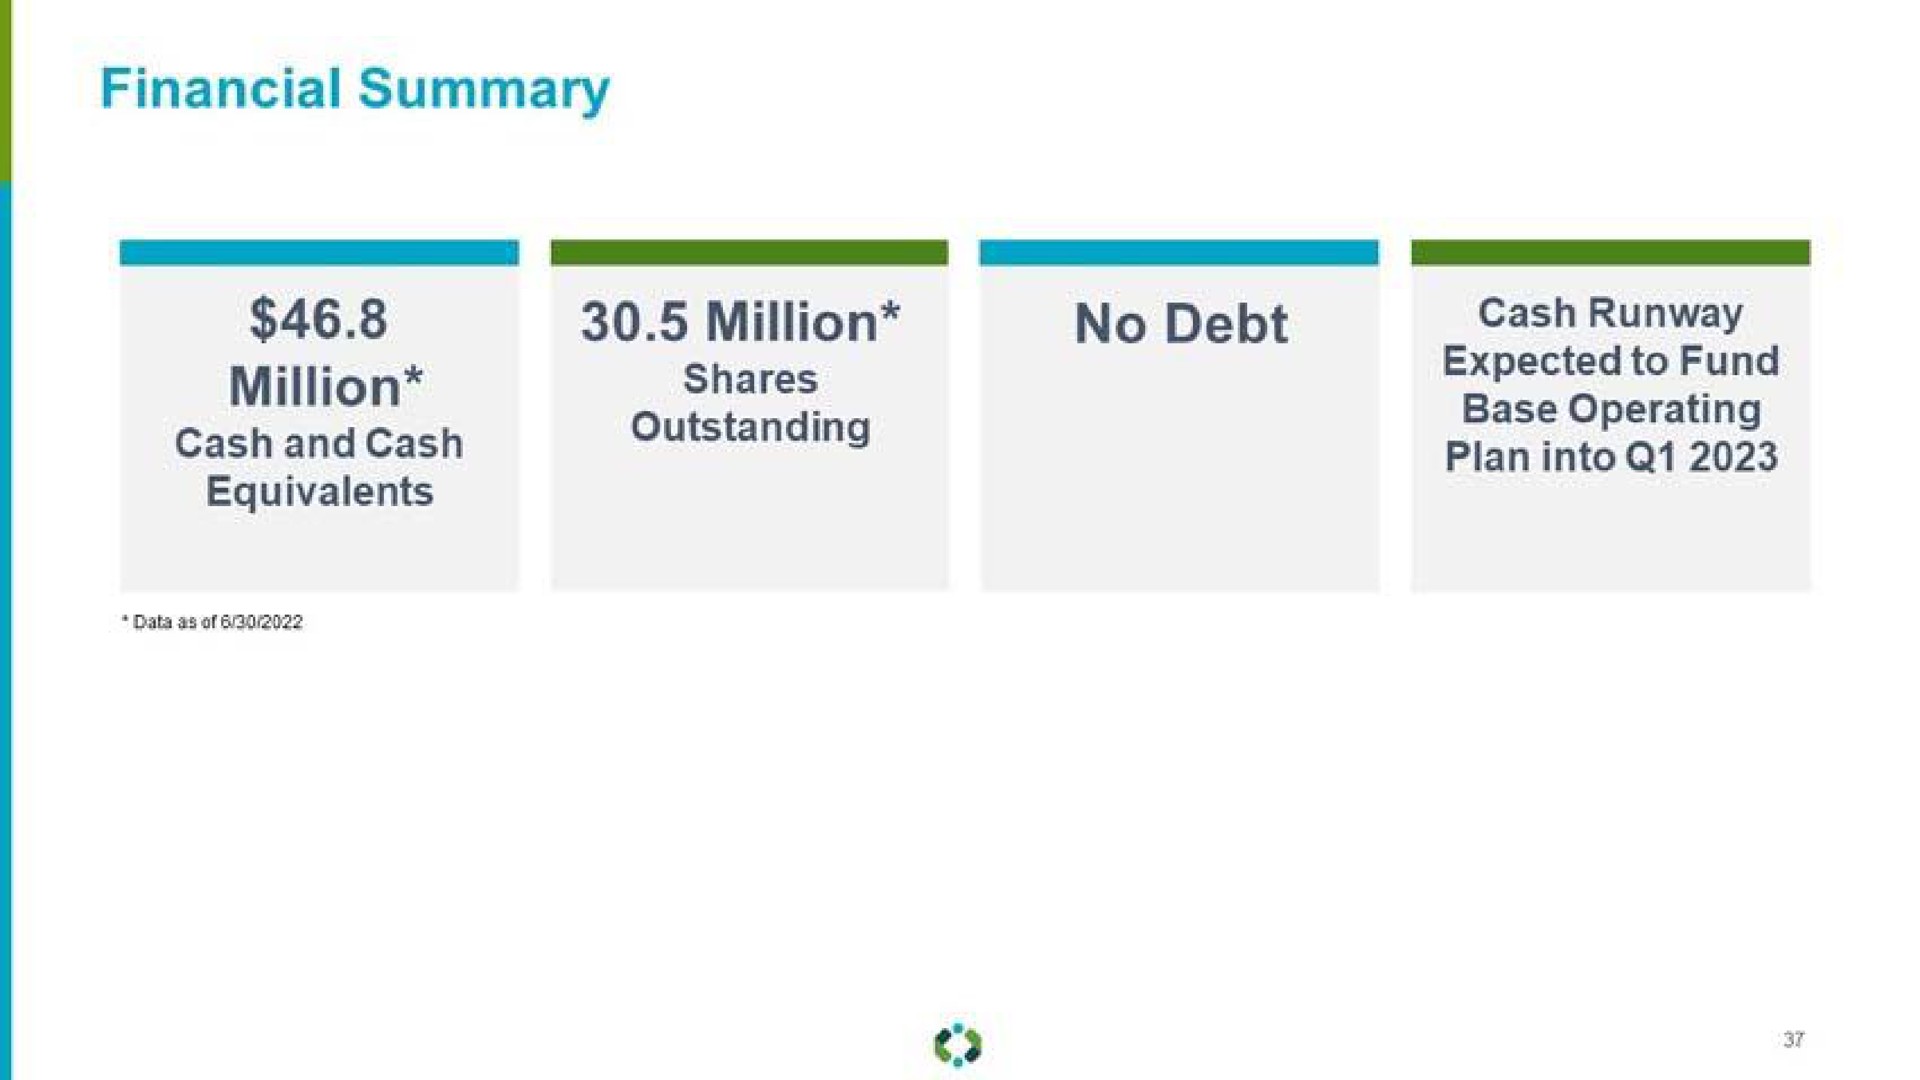 financial summary million million shares no debt cash runway | Aravive